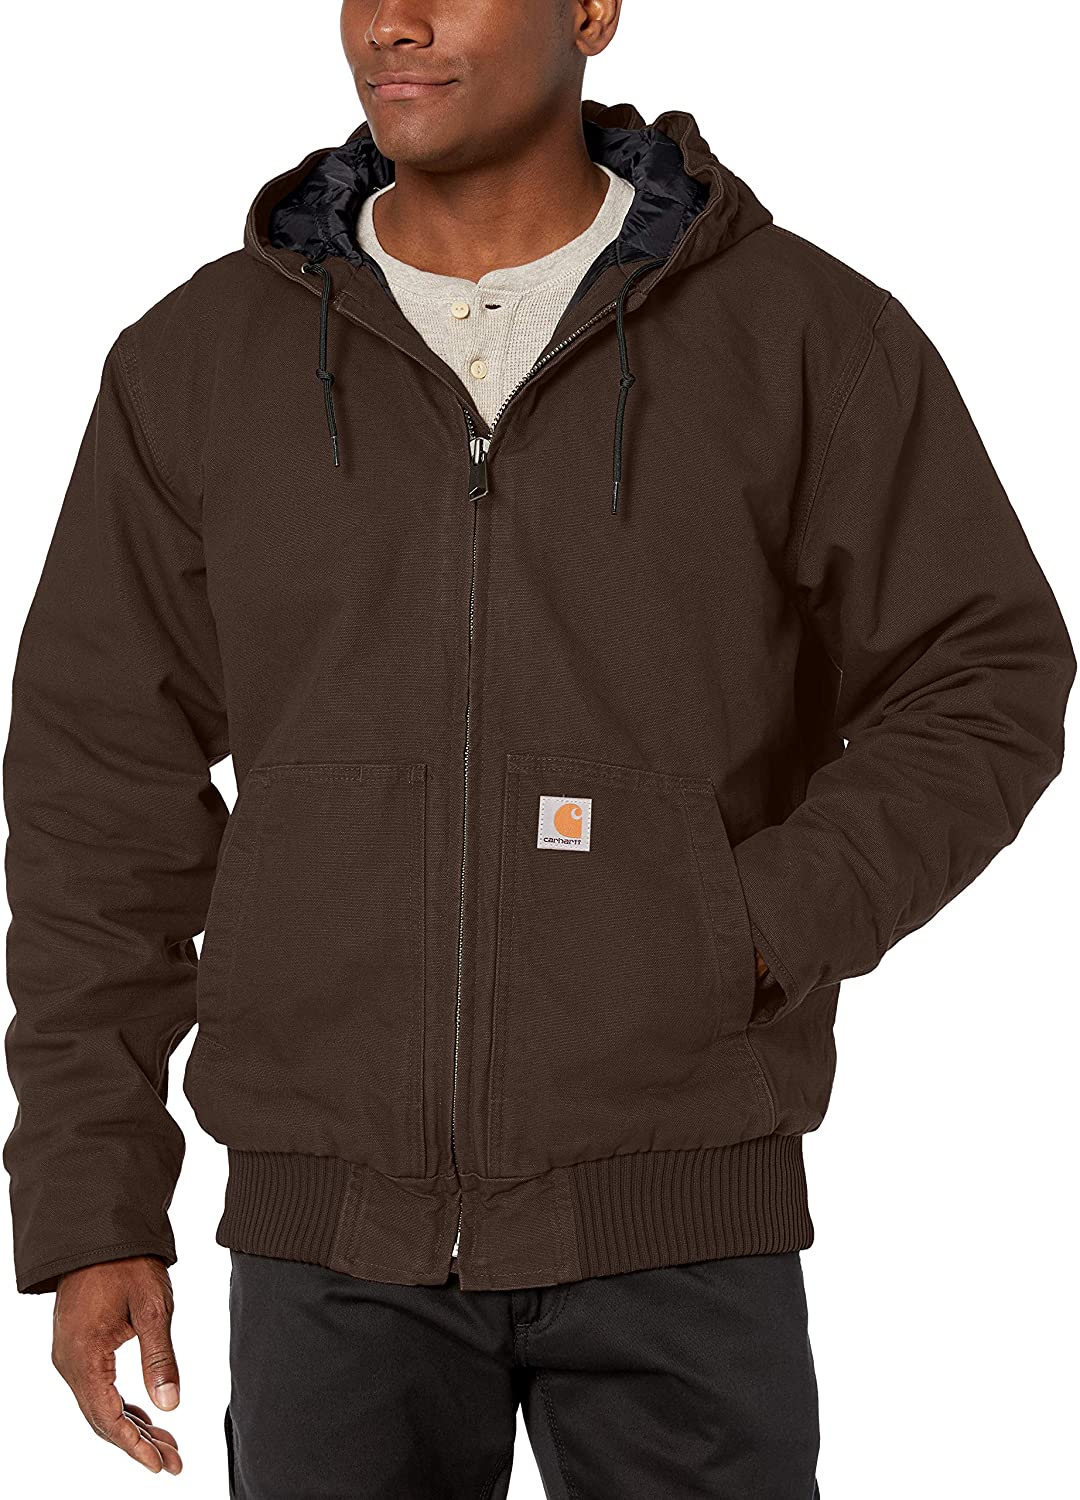 natuurlijk Comorama Ophef Carhartt mens Active Jacket J130 (Regular and Big & Tall Sizes) | eBay